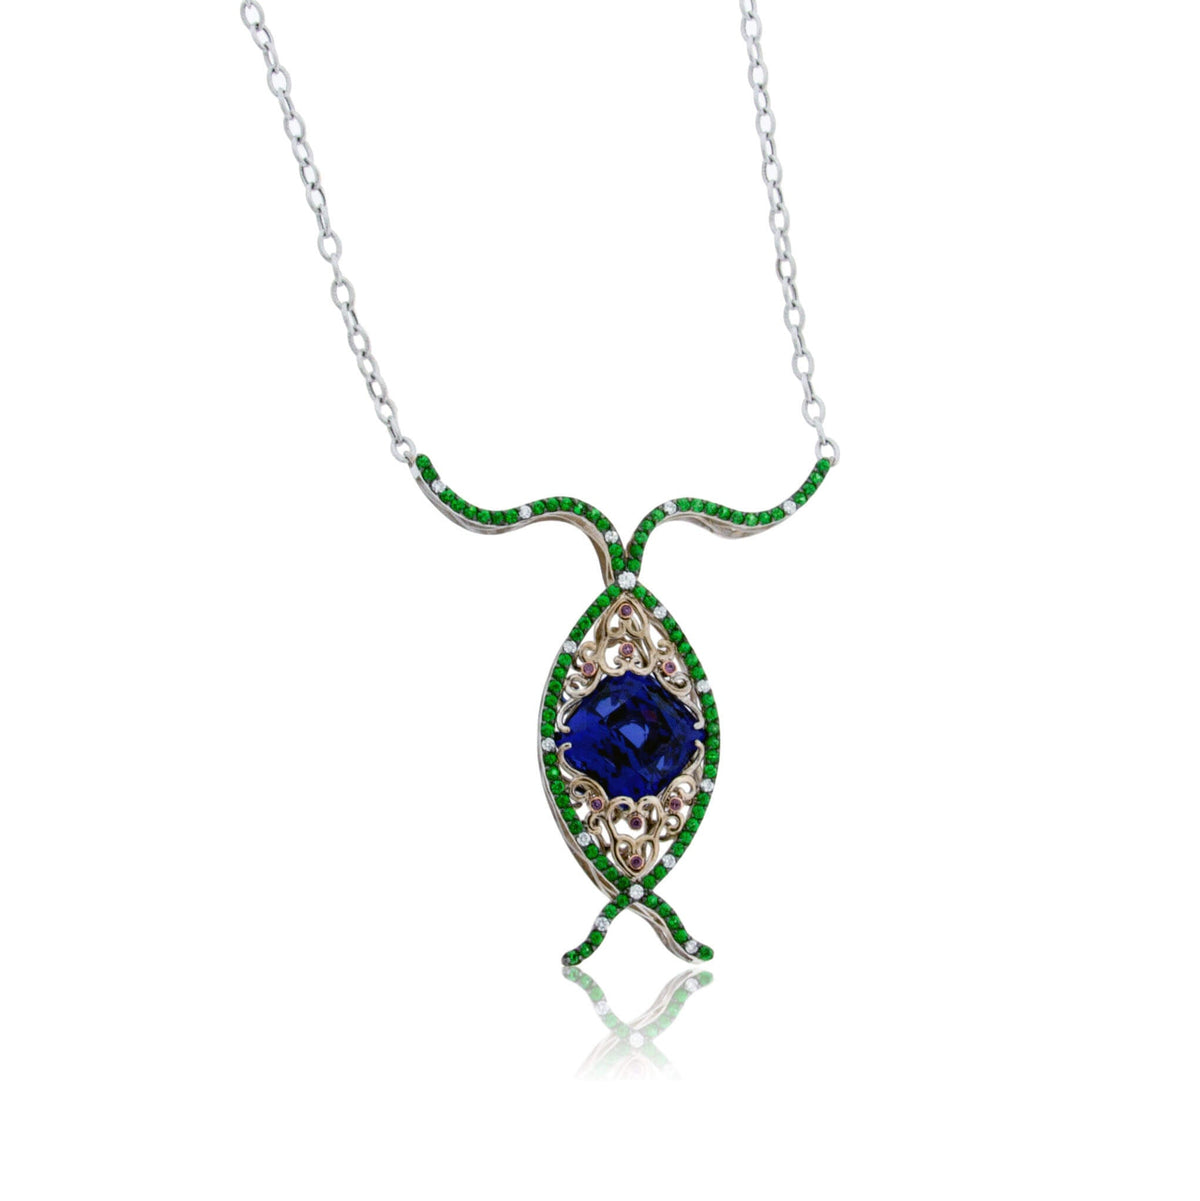 29.70 carat Tanzanite pendant designed by Cole Whipple